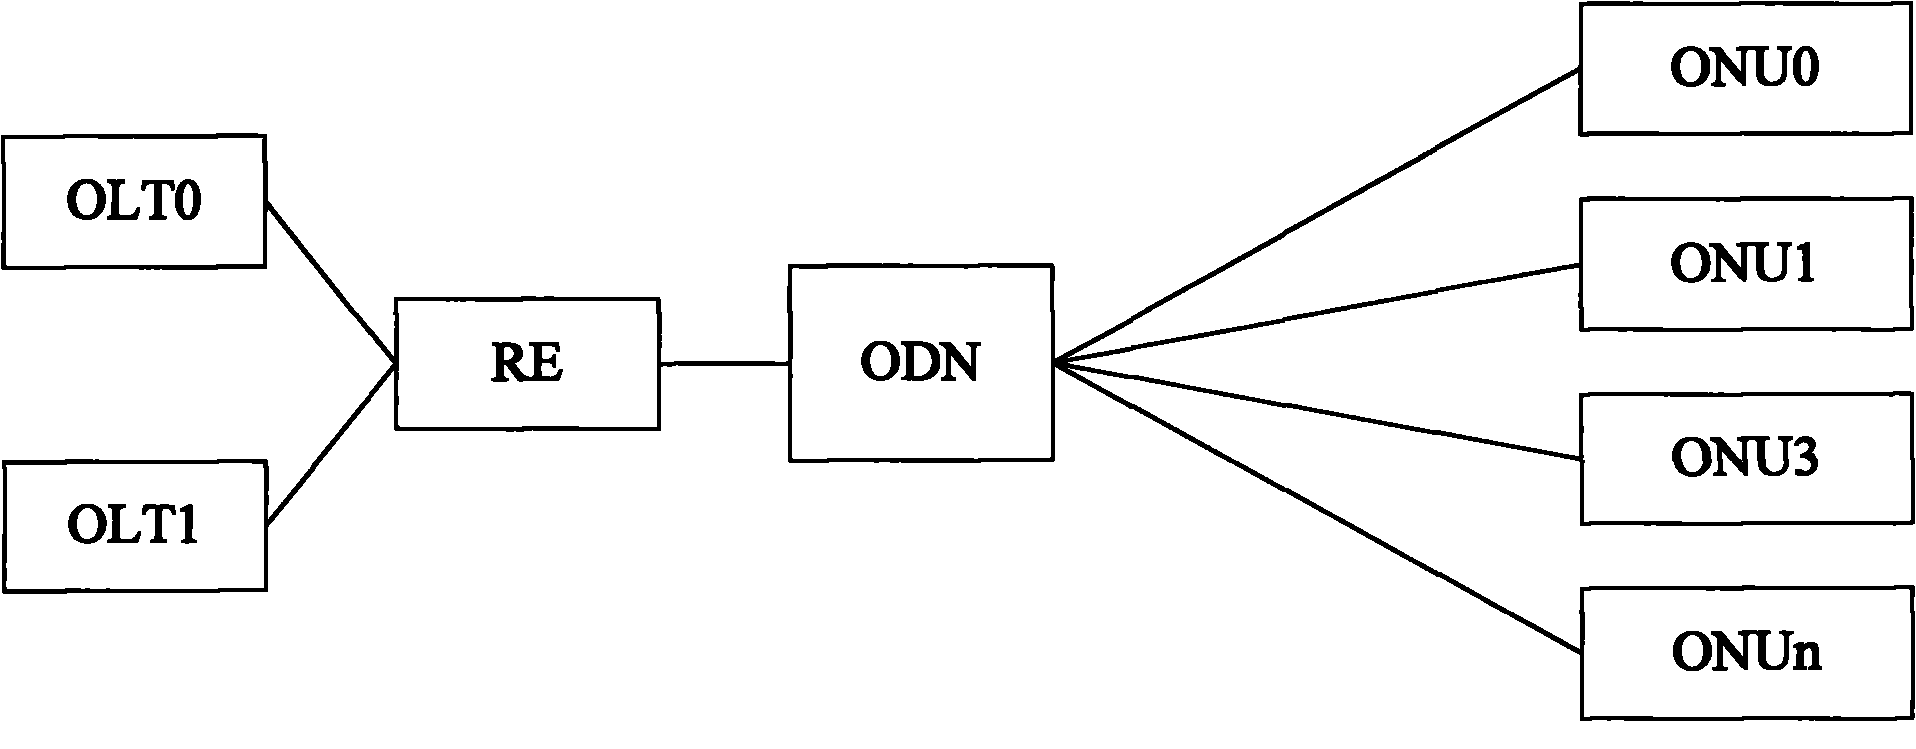 Method for distance measurement in gigabit passive optical network system